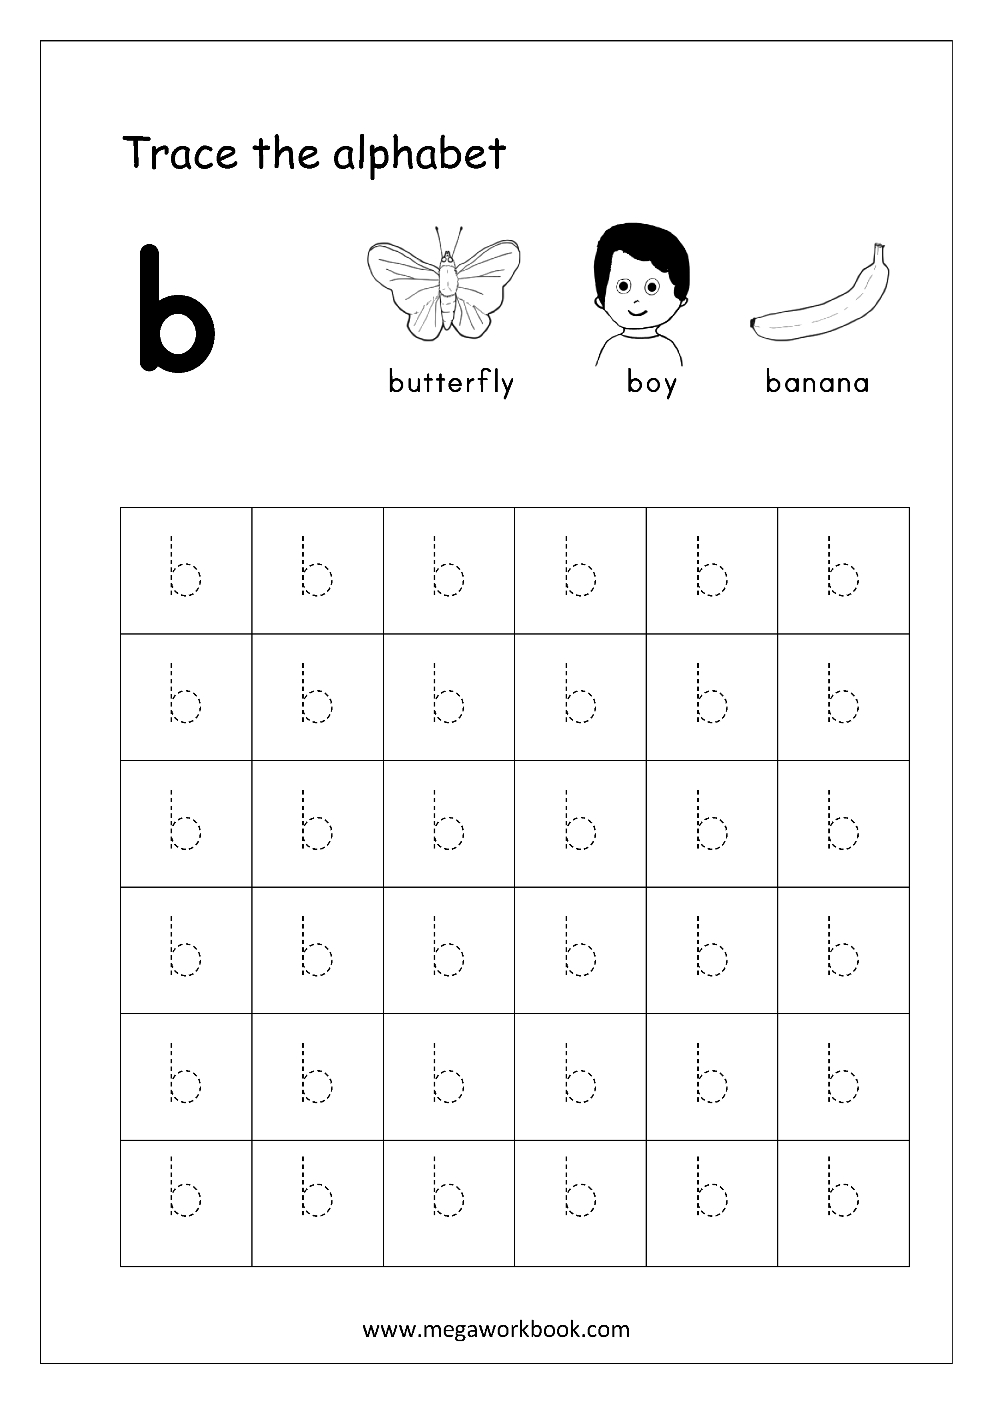 Free English Worksheets - Alphabet Tracing (Small Letters regarding Small Letters Alphabet Tracing Sheets